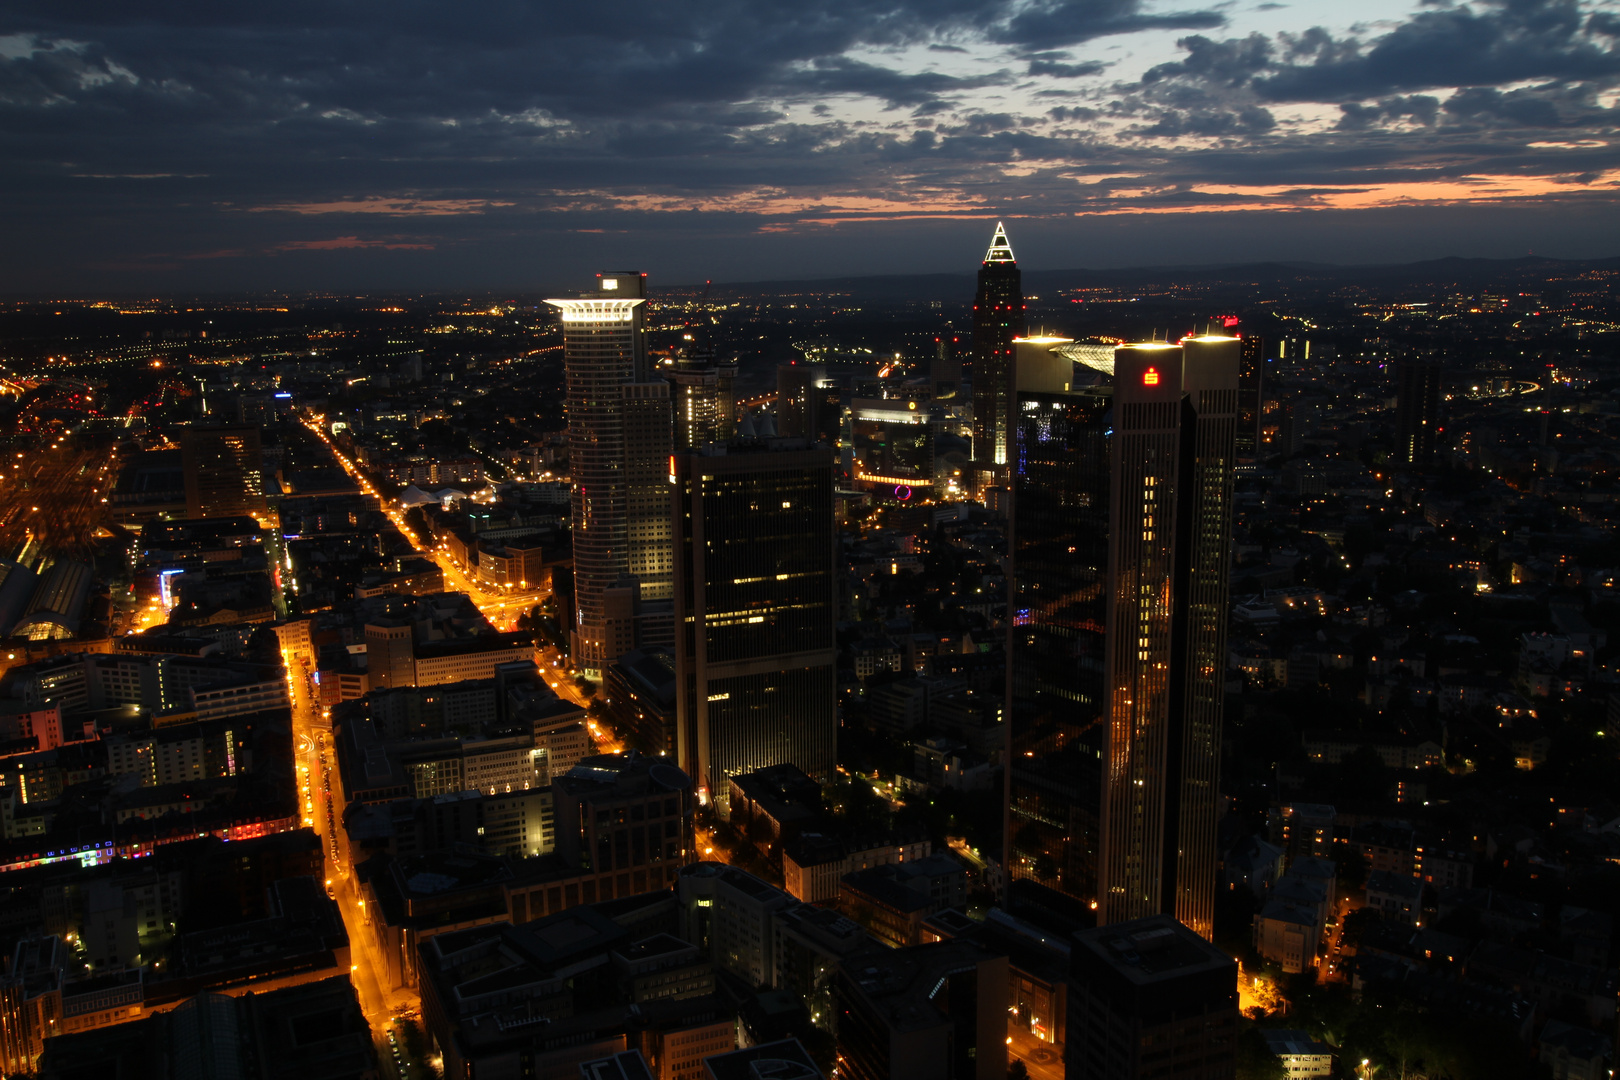 Frankfurt bei Nacht II